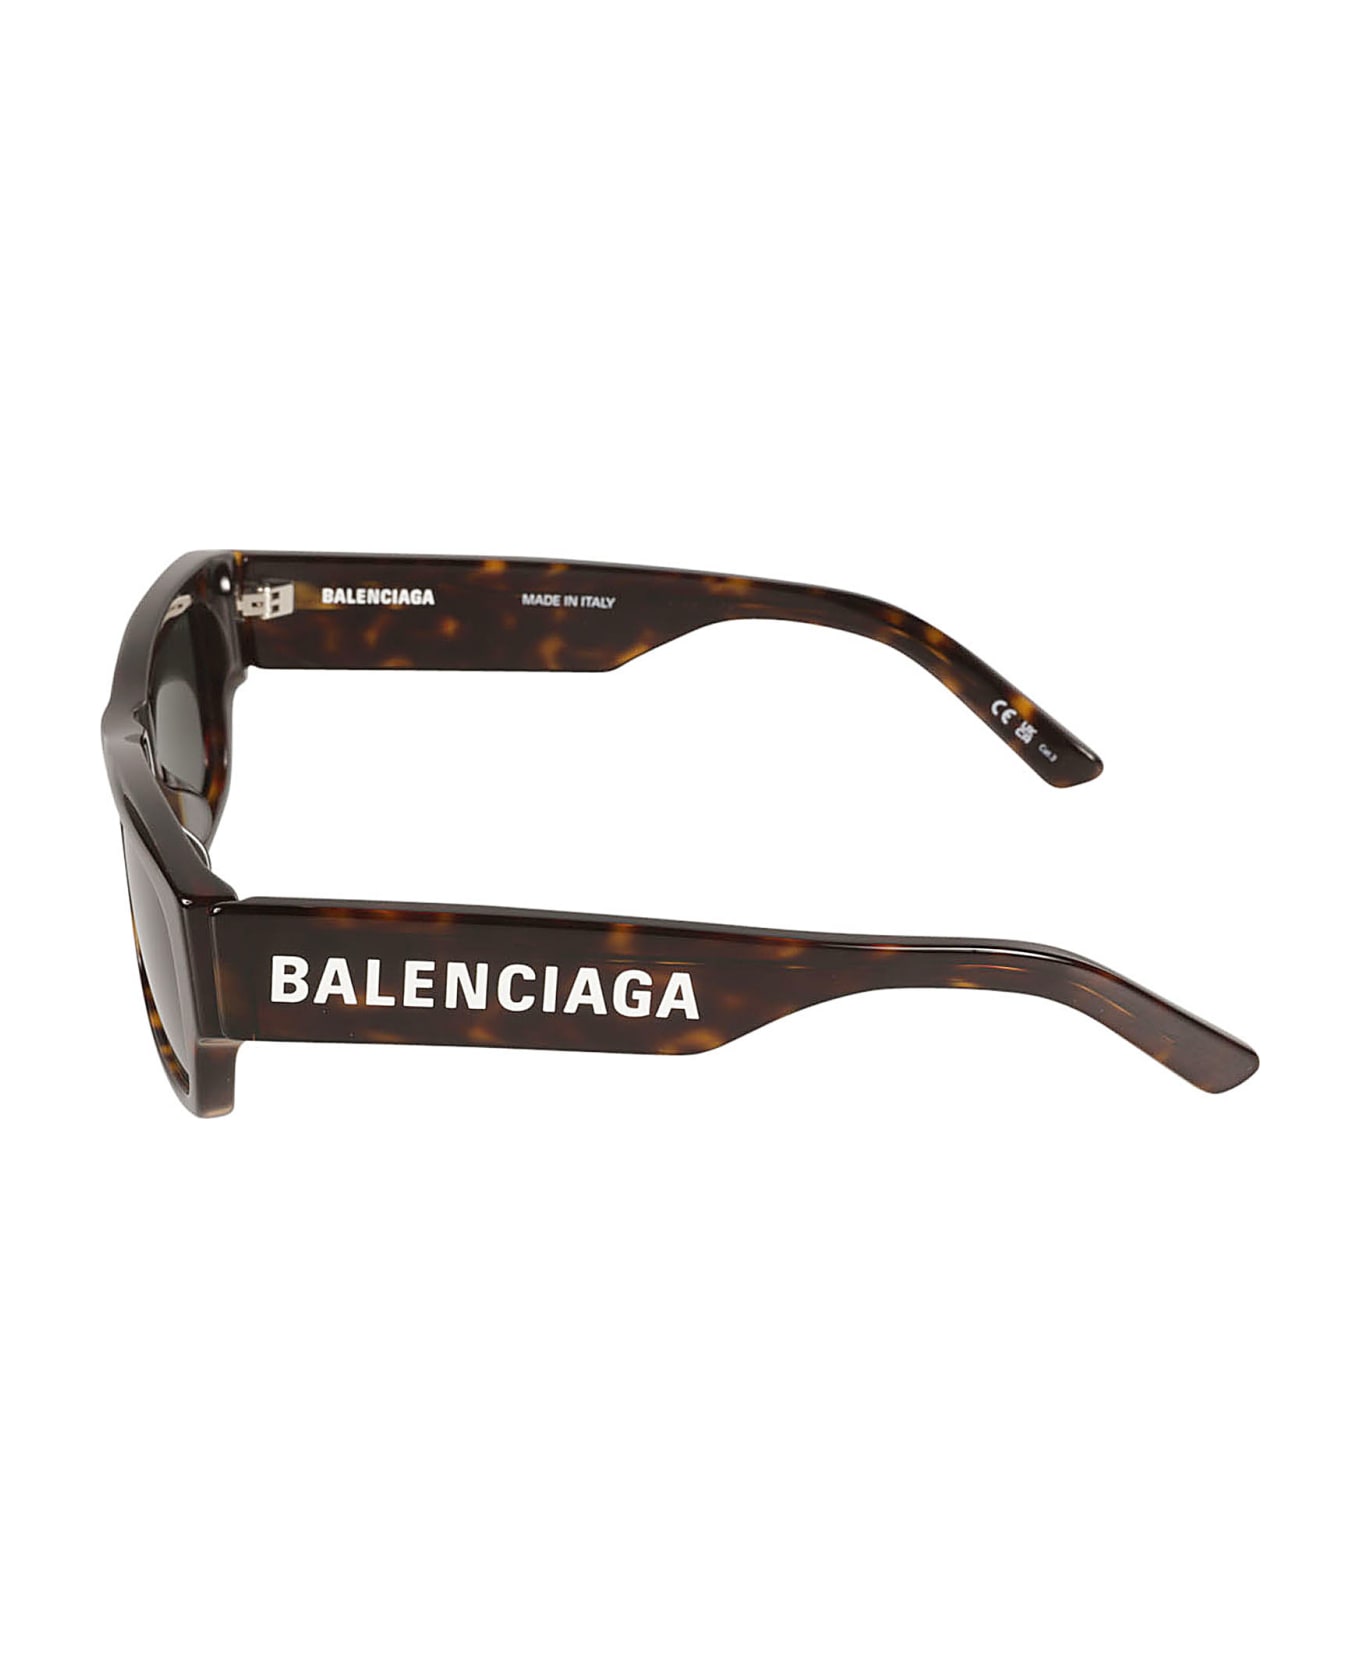 Balenciaga Eyewear Logo Sided Flame Effect Rectangular Frame Sunglasses - Havana/Green サングラス